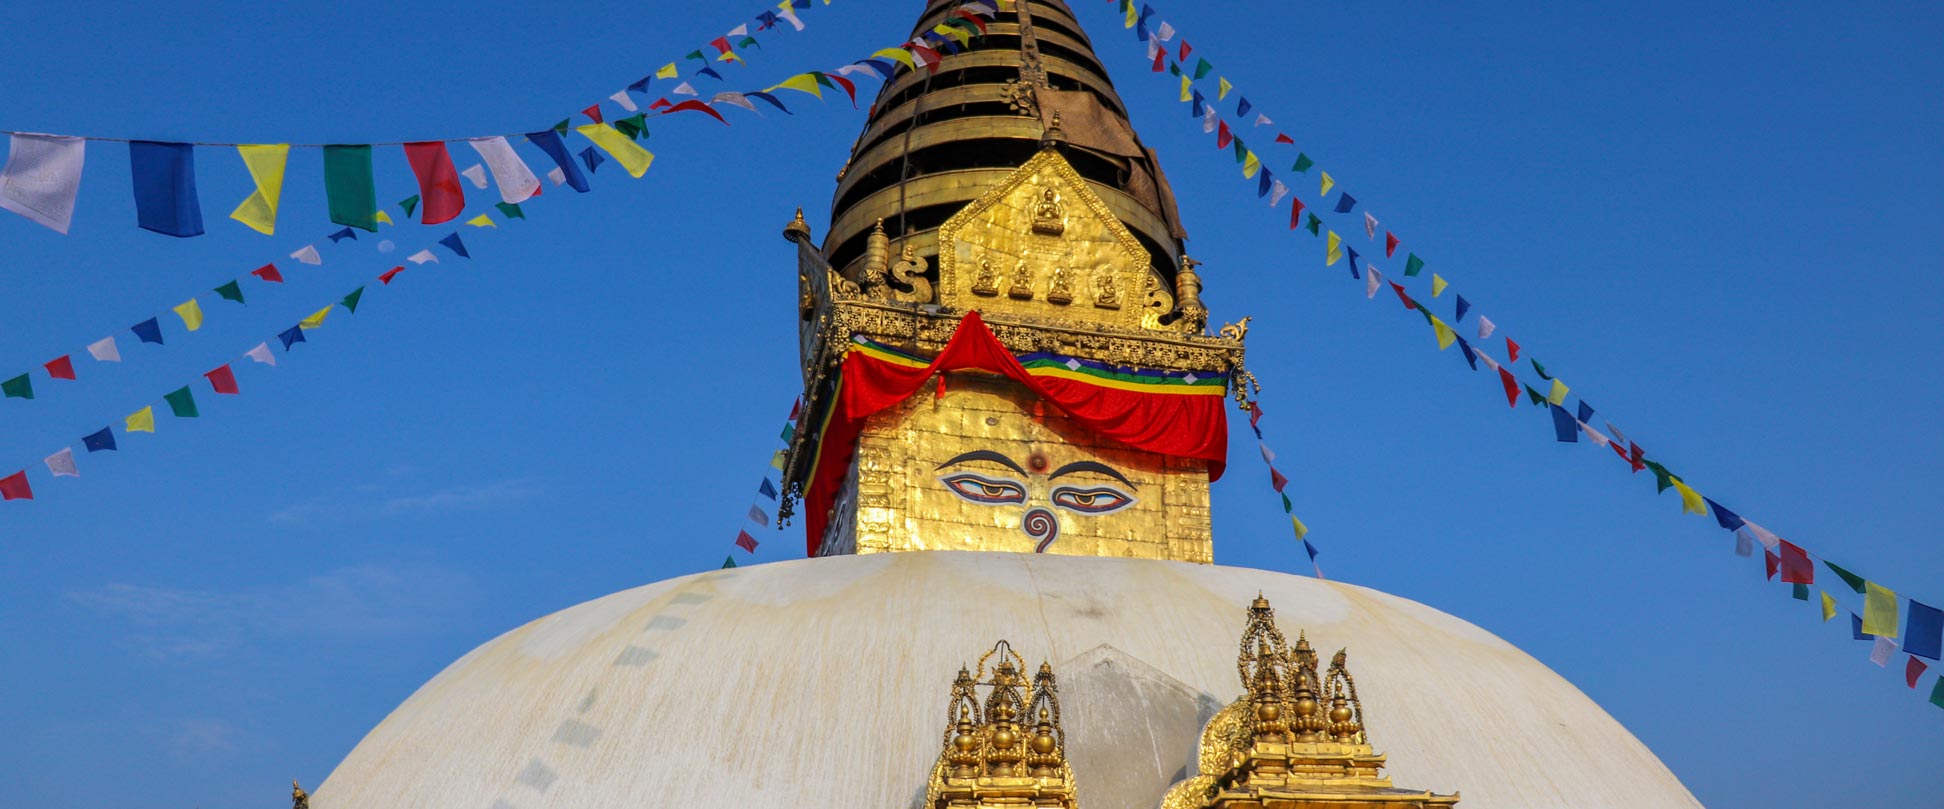 Swayambhunath stupa with "Buddha's eyes" and prayer flags